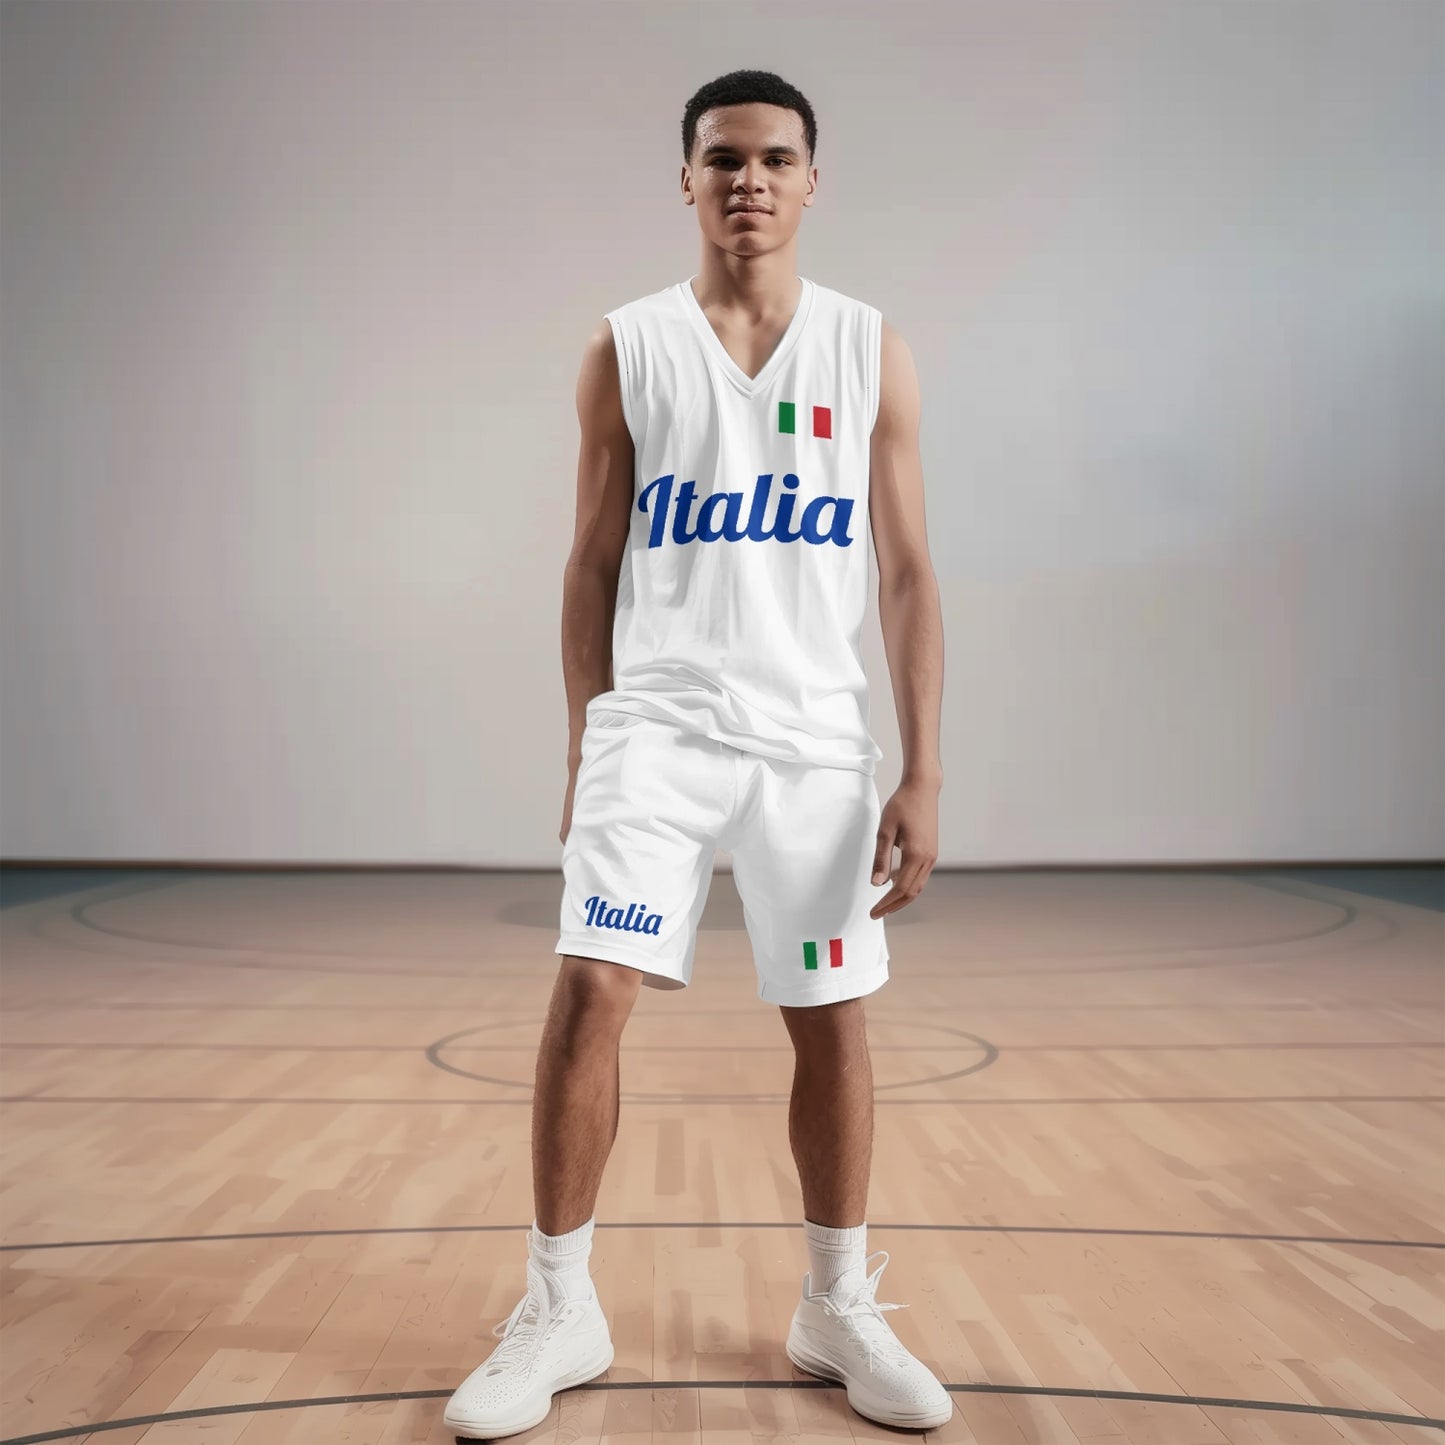 Italy Basketball Jersey Set - White